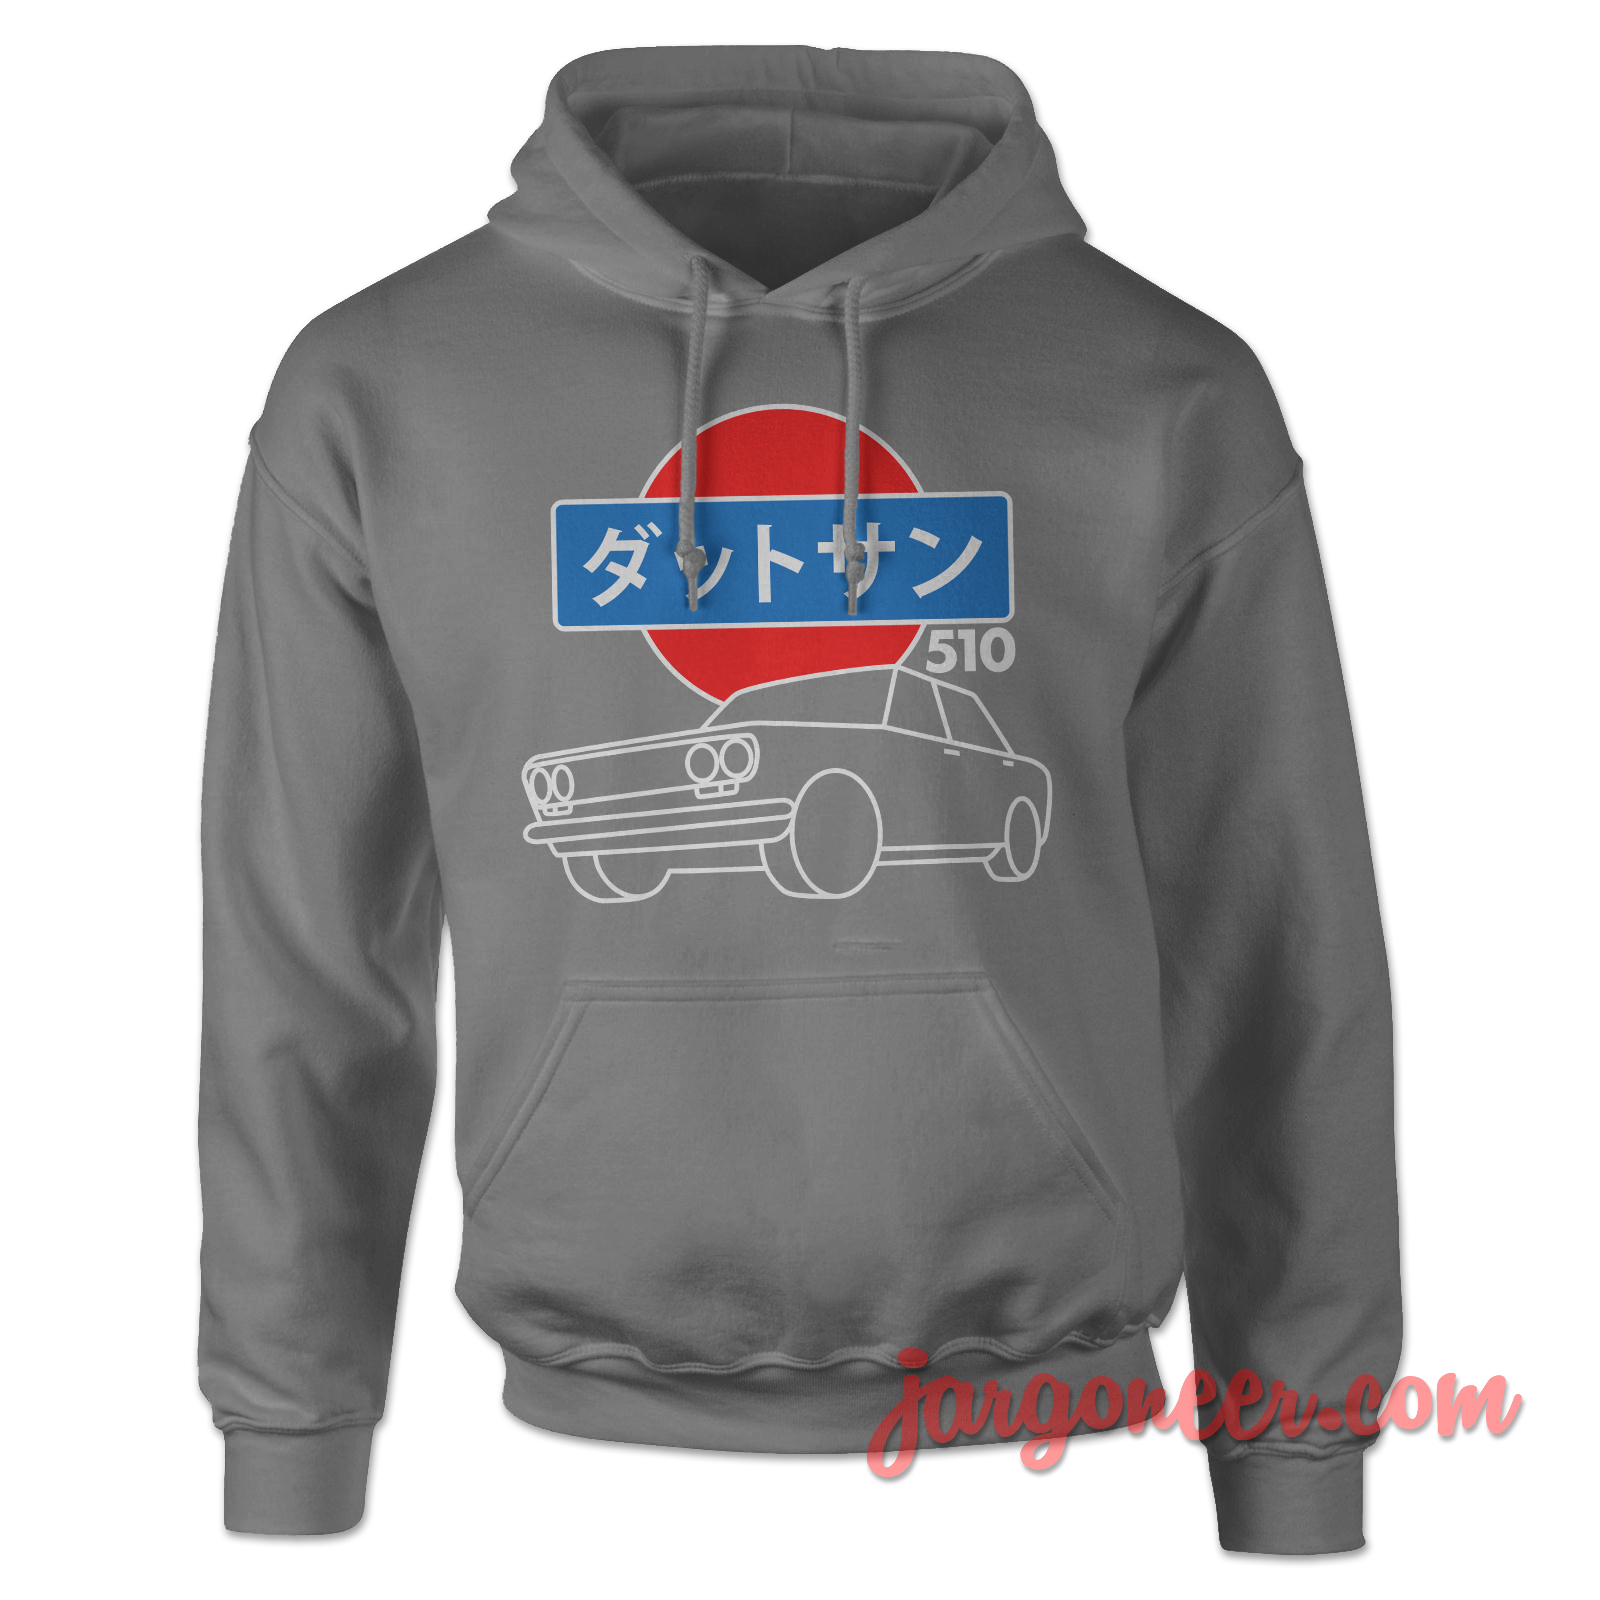 Datsun 510 Gray Hoody - Shop Unique Graphic Cool Shirt Designs